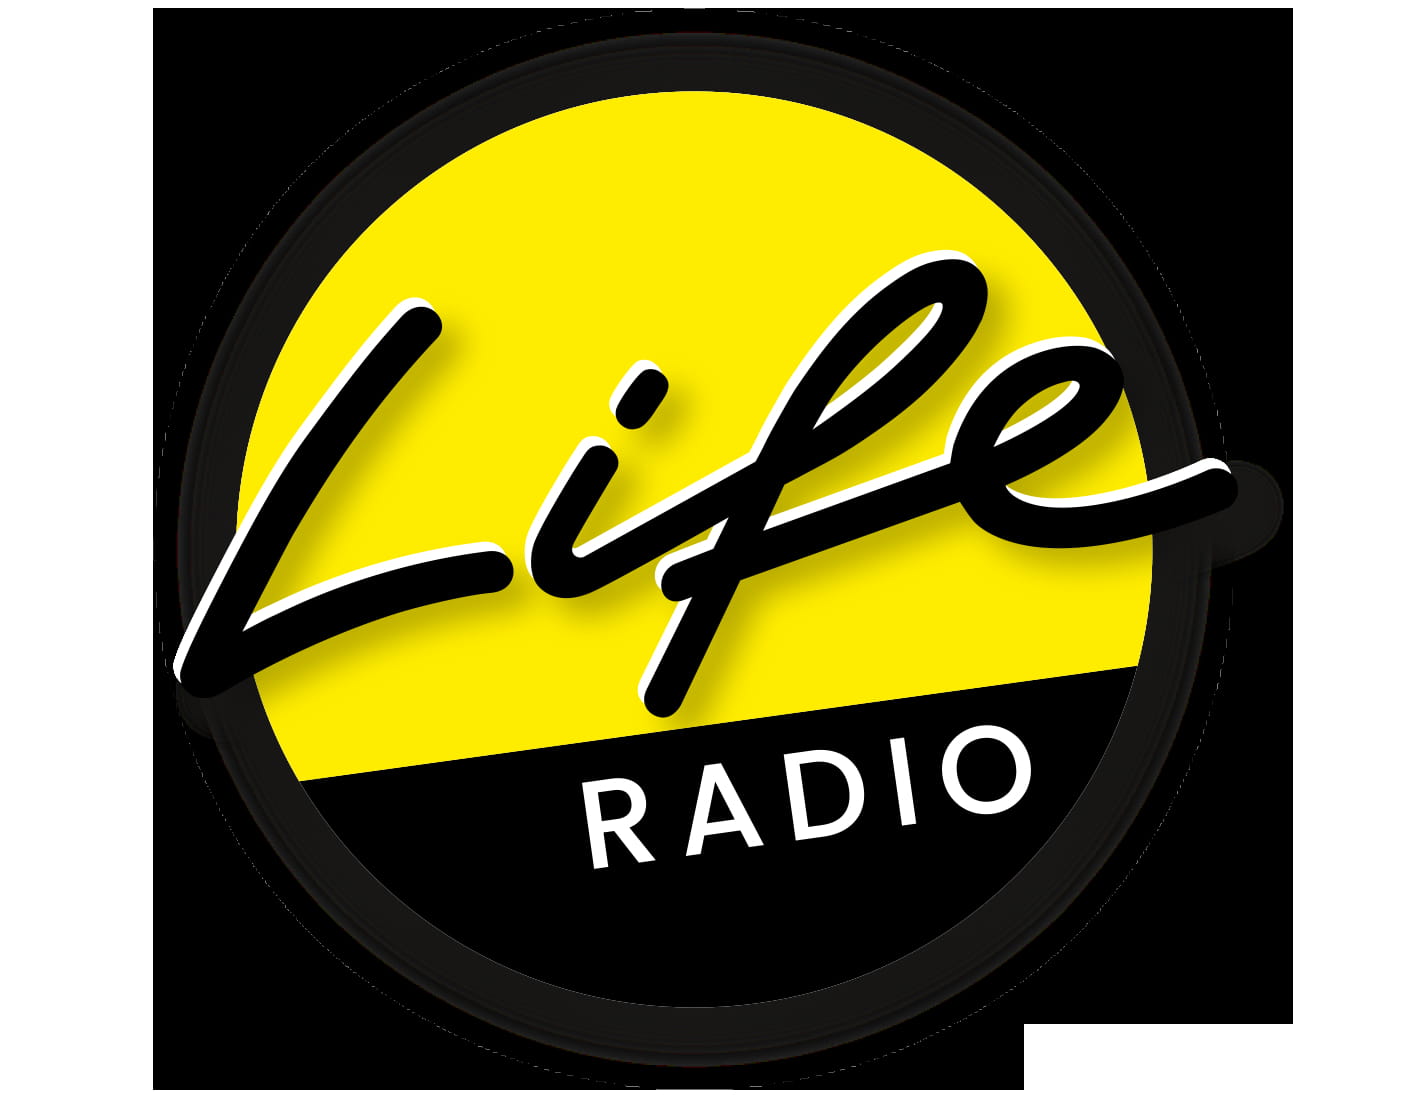 Logo Liferadio